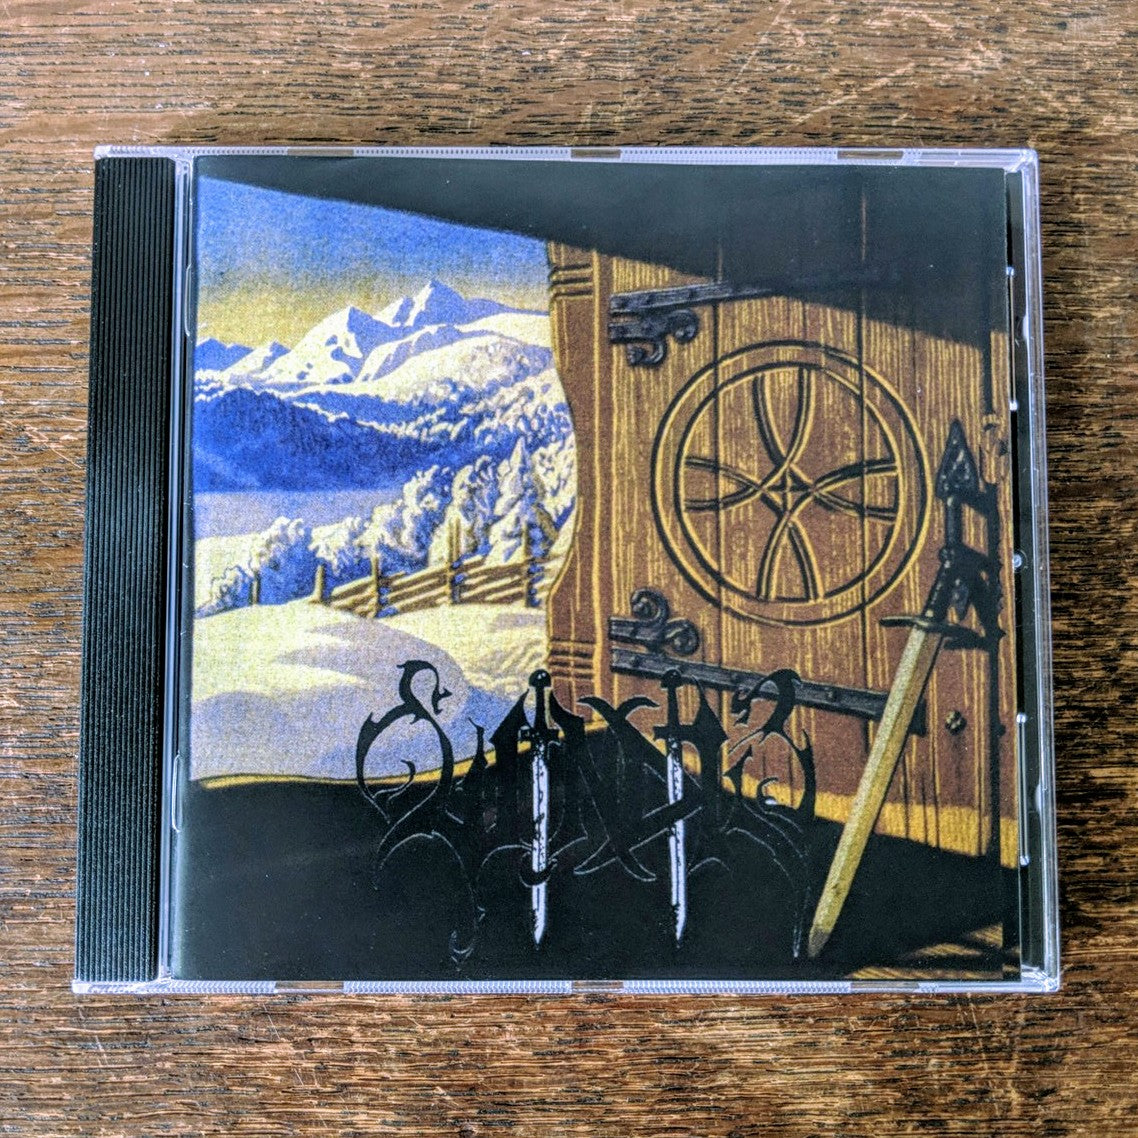 [SOLD OUT] WINDIR "Arntor" CD